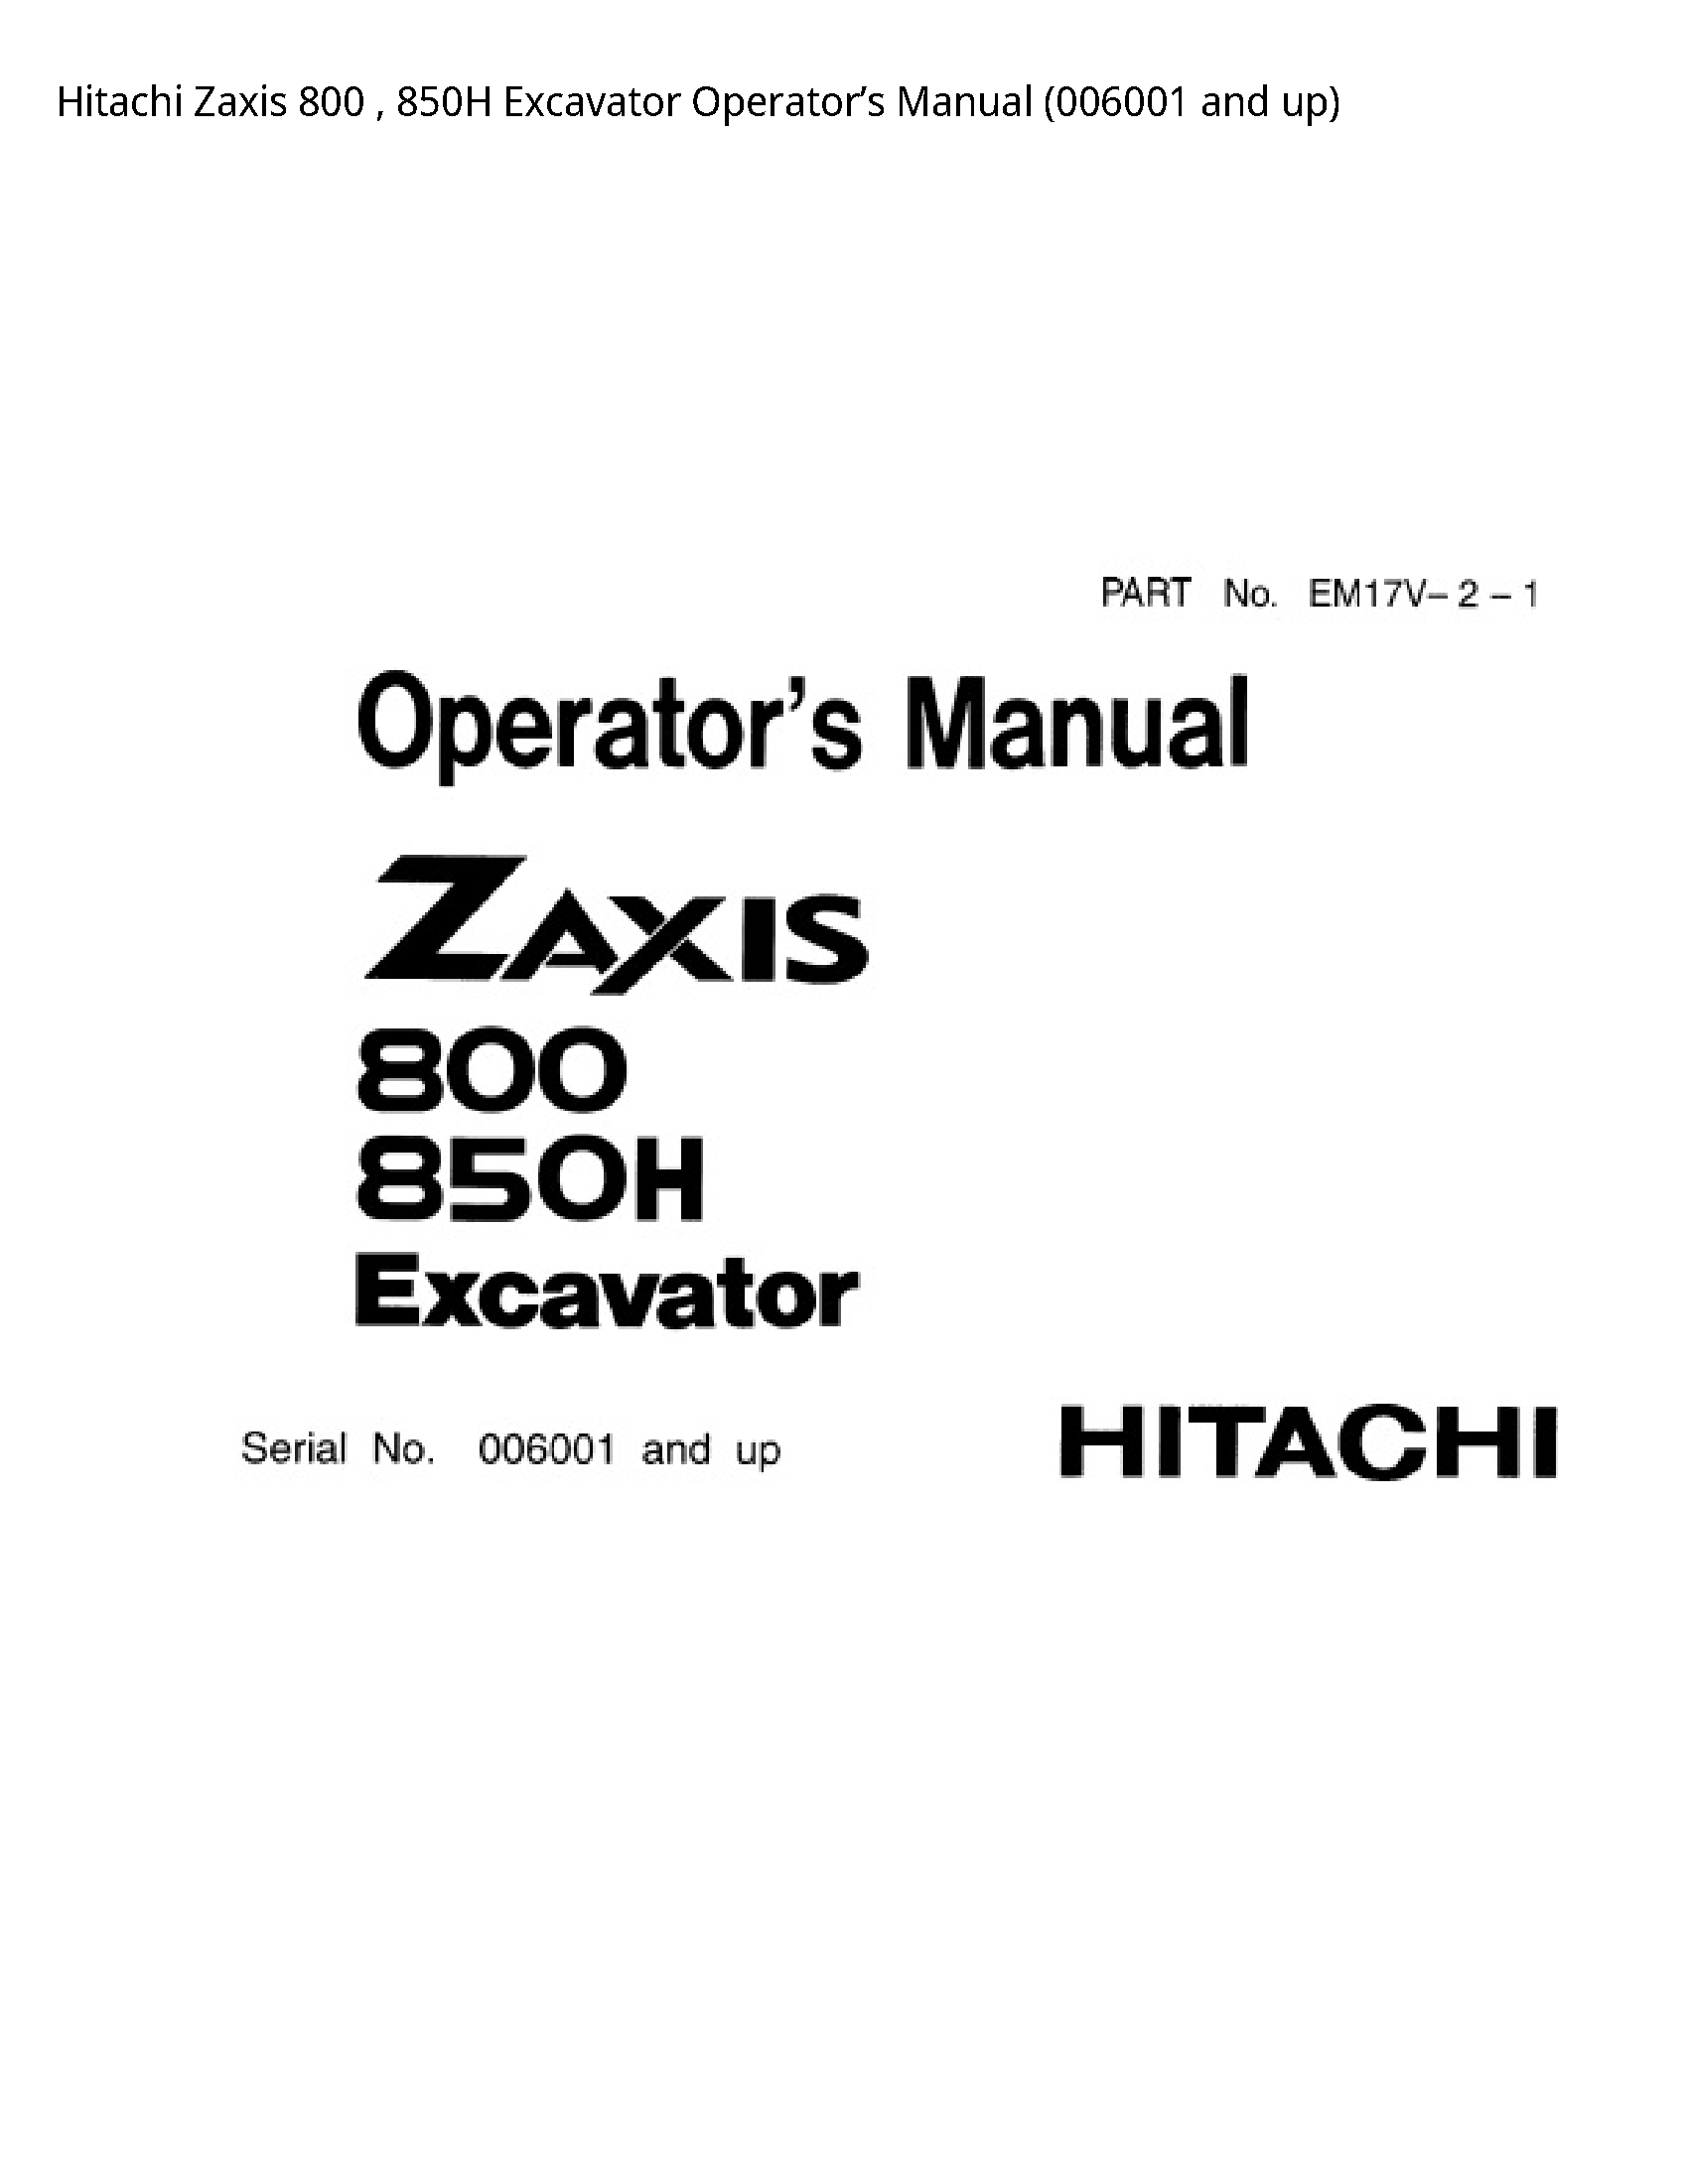 Hitachi 800 Zaxis Excavator Operator’s manual